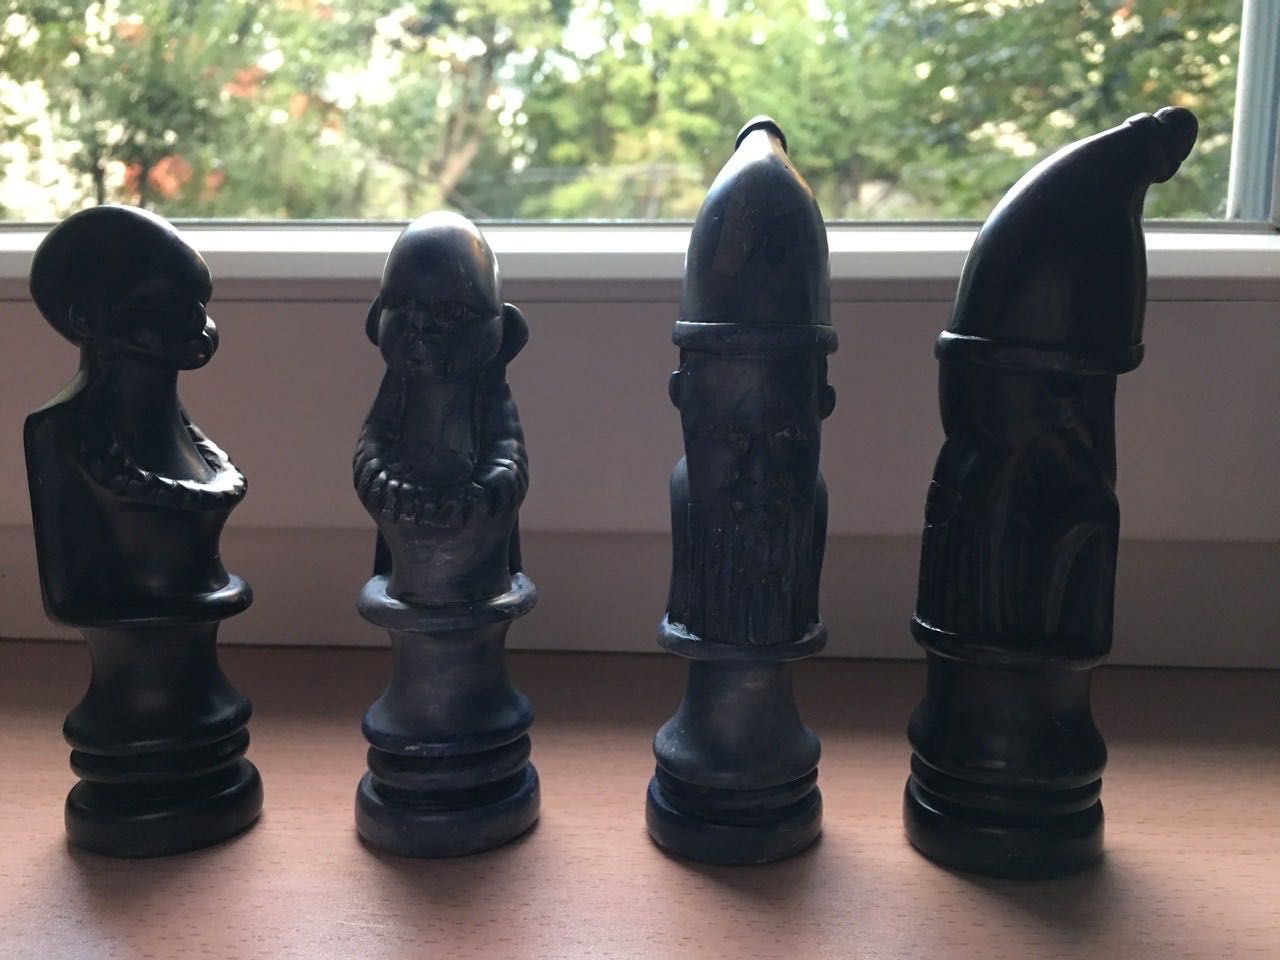 Piese șah vechi model african sau aztec handmade